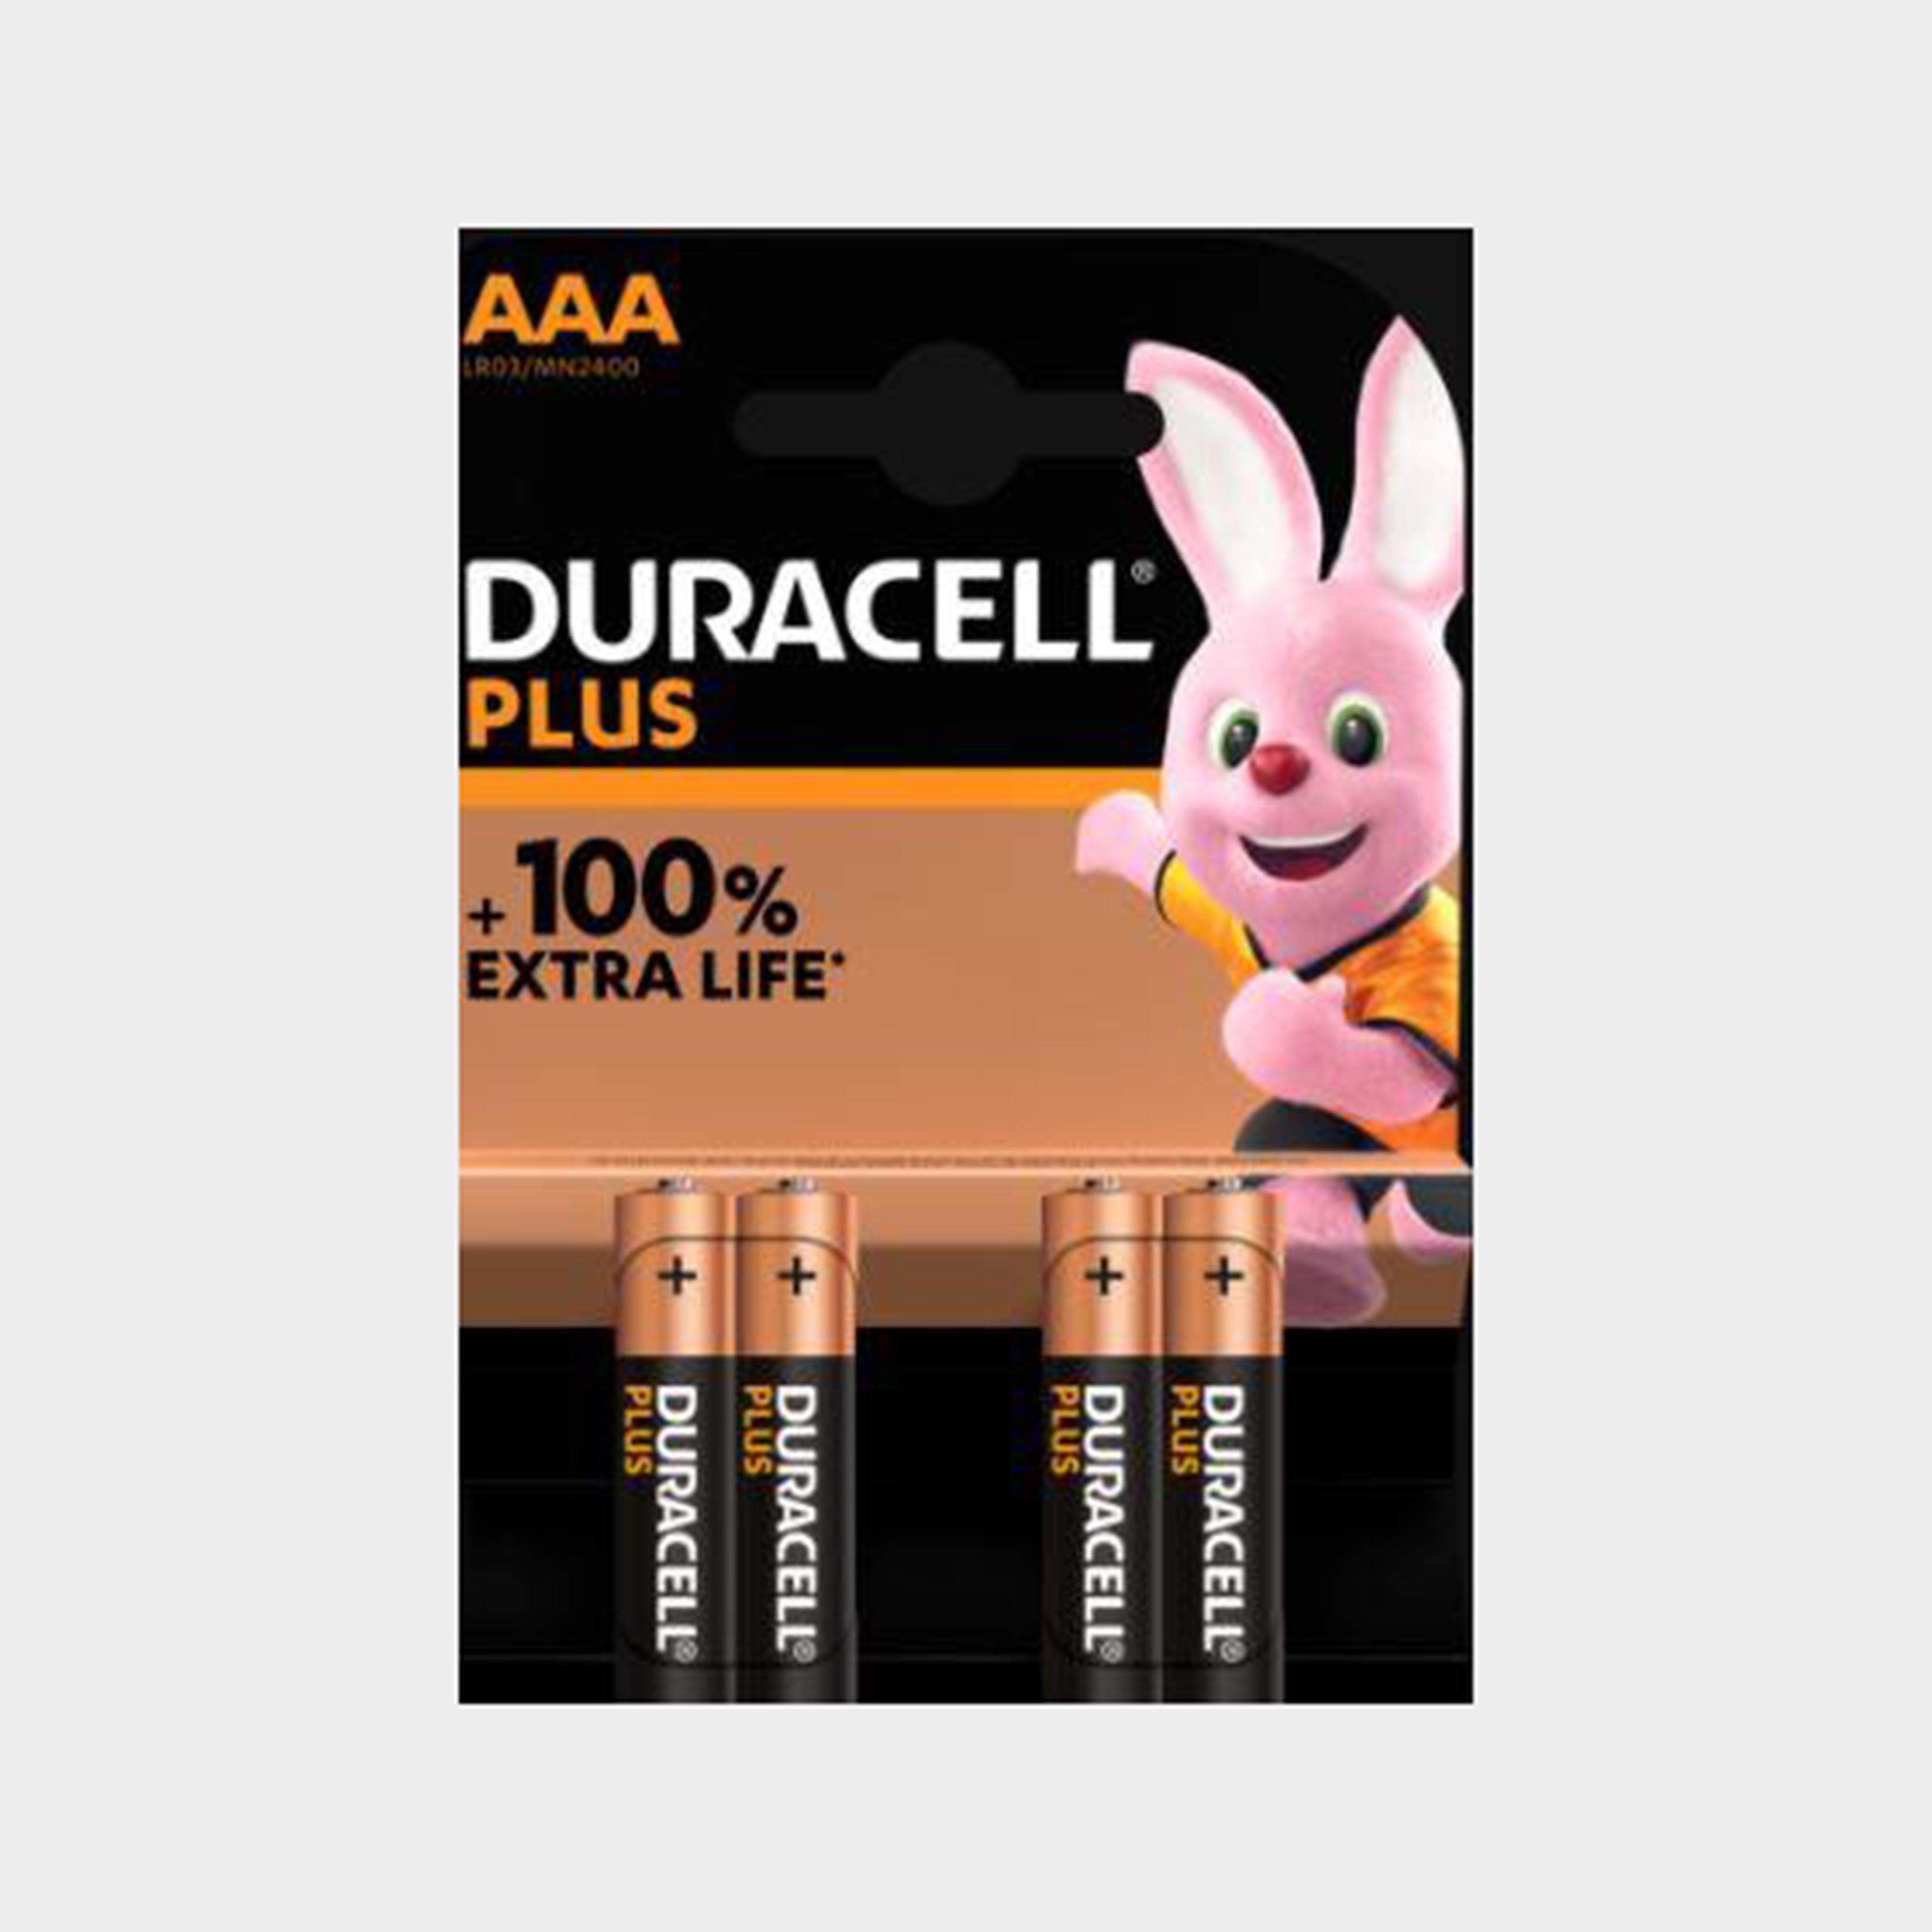 Duracell Aaa Plus 100 Batteries (4 Pack) - Black/4pk  Black/4pk